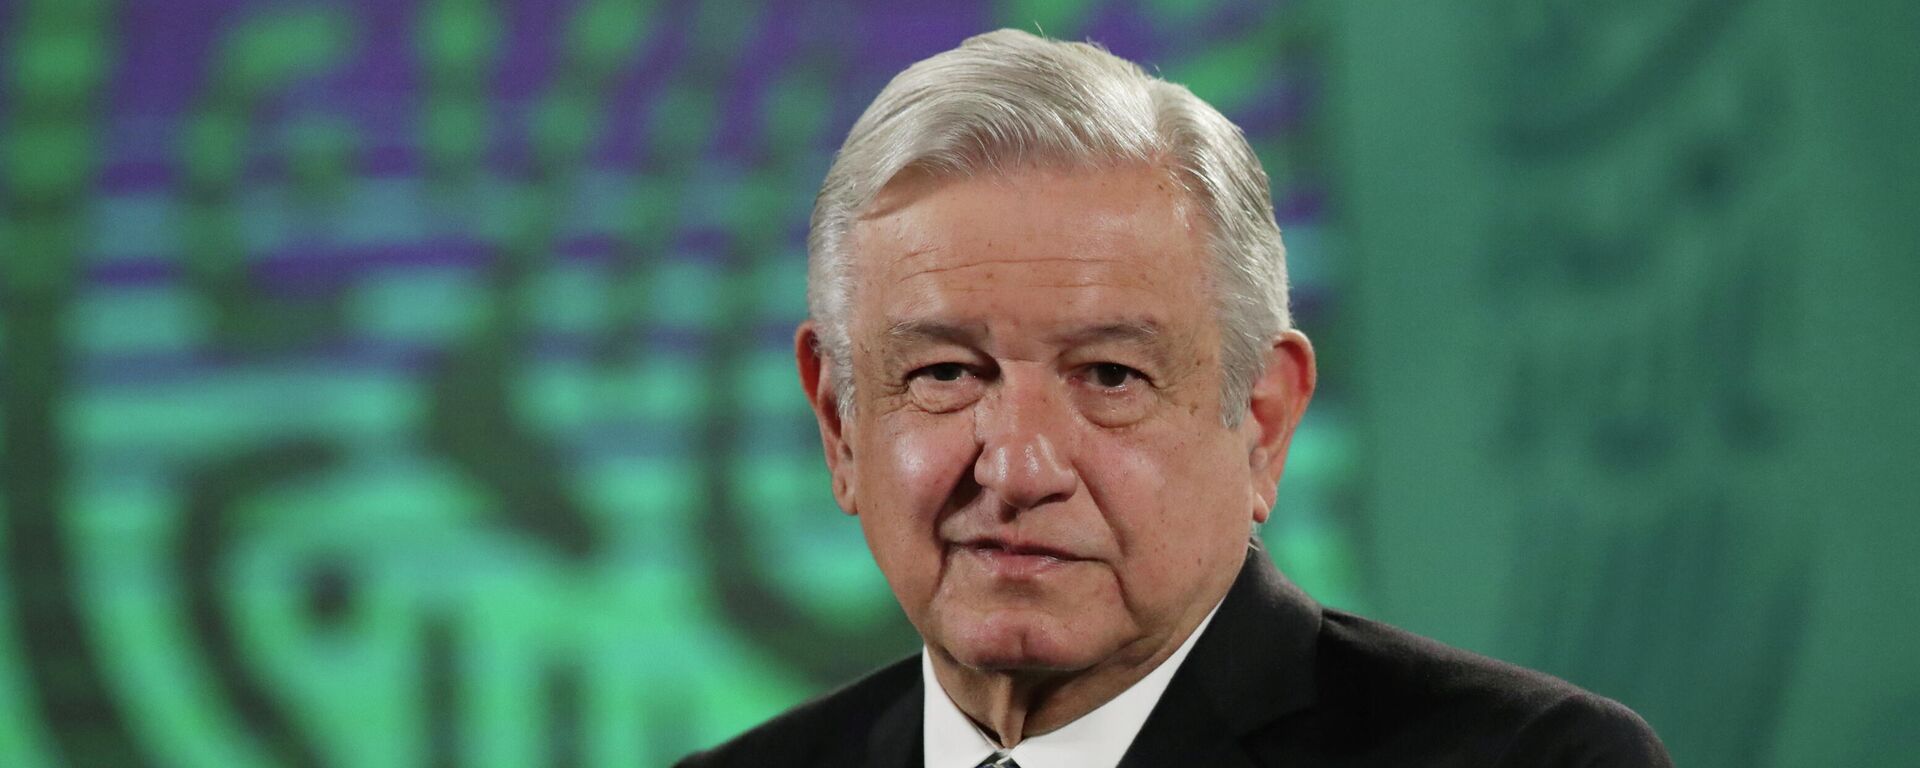 Andrés Manuel López Obrador, el presidente de México  - Sputnik Mundo, 1920, 03.06.2021